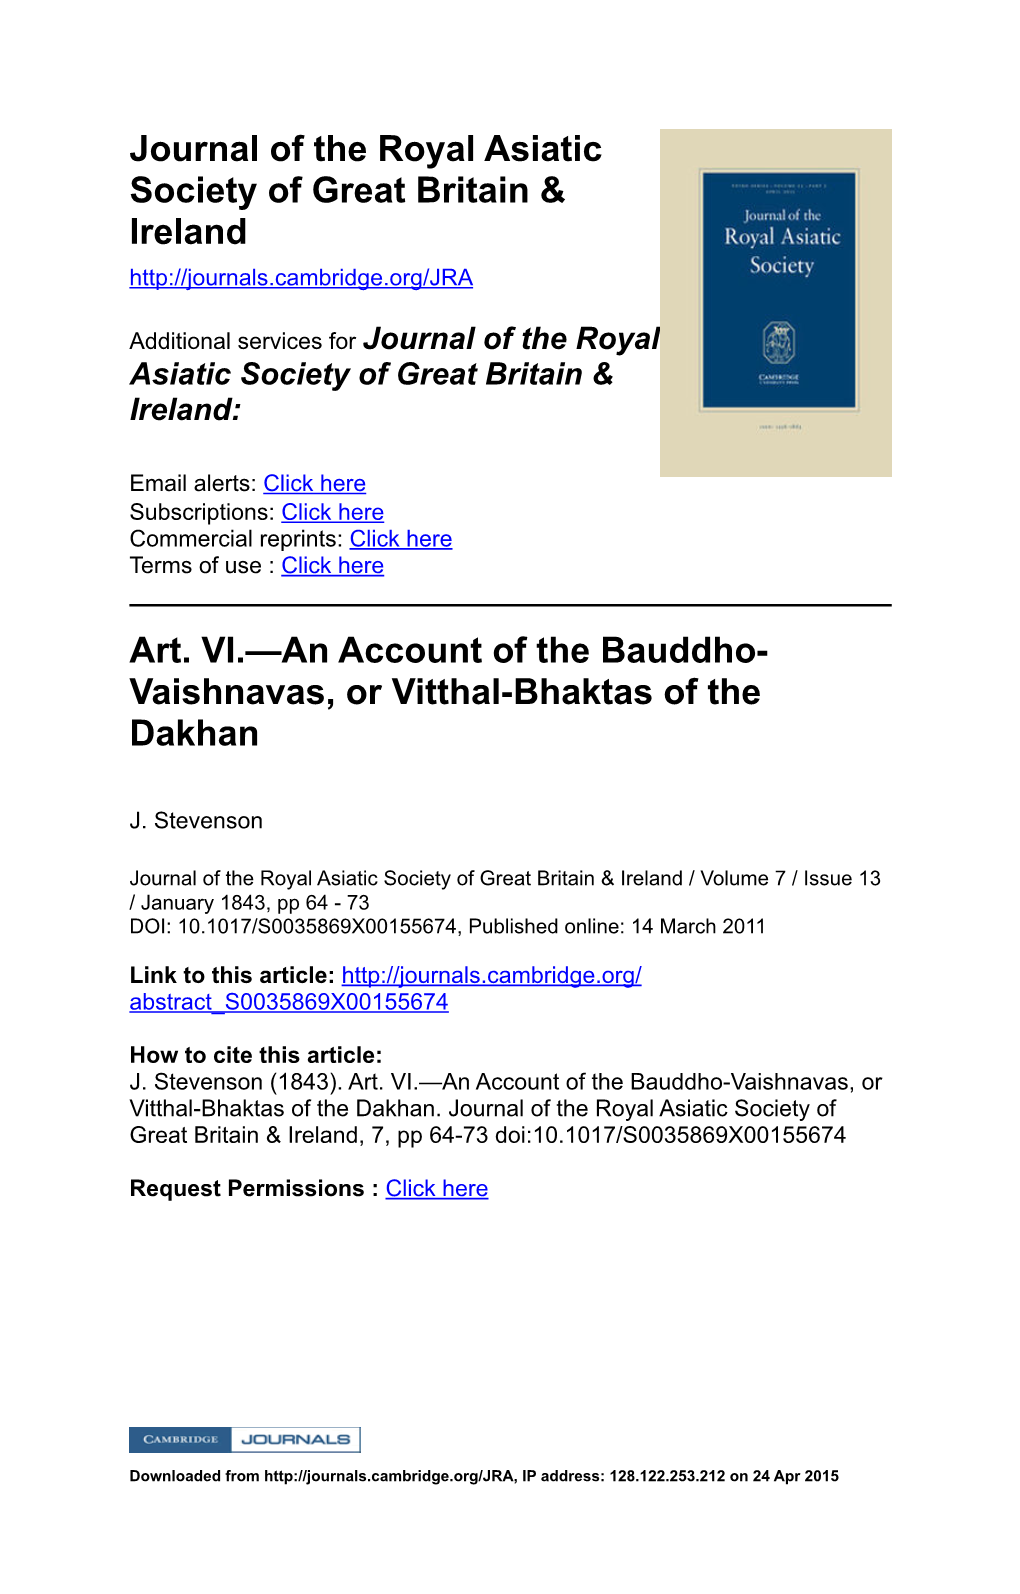 Art. VI.—An Account of the Bauddho-Vaishnavas, Or Vitthal-Bhaktas of the Dakhan